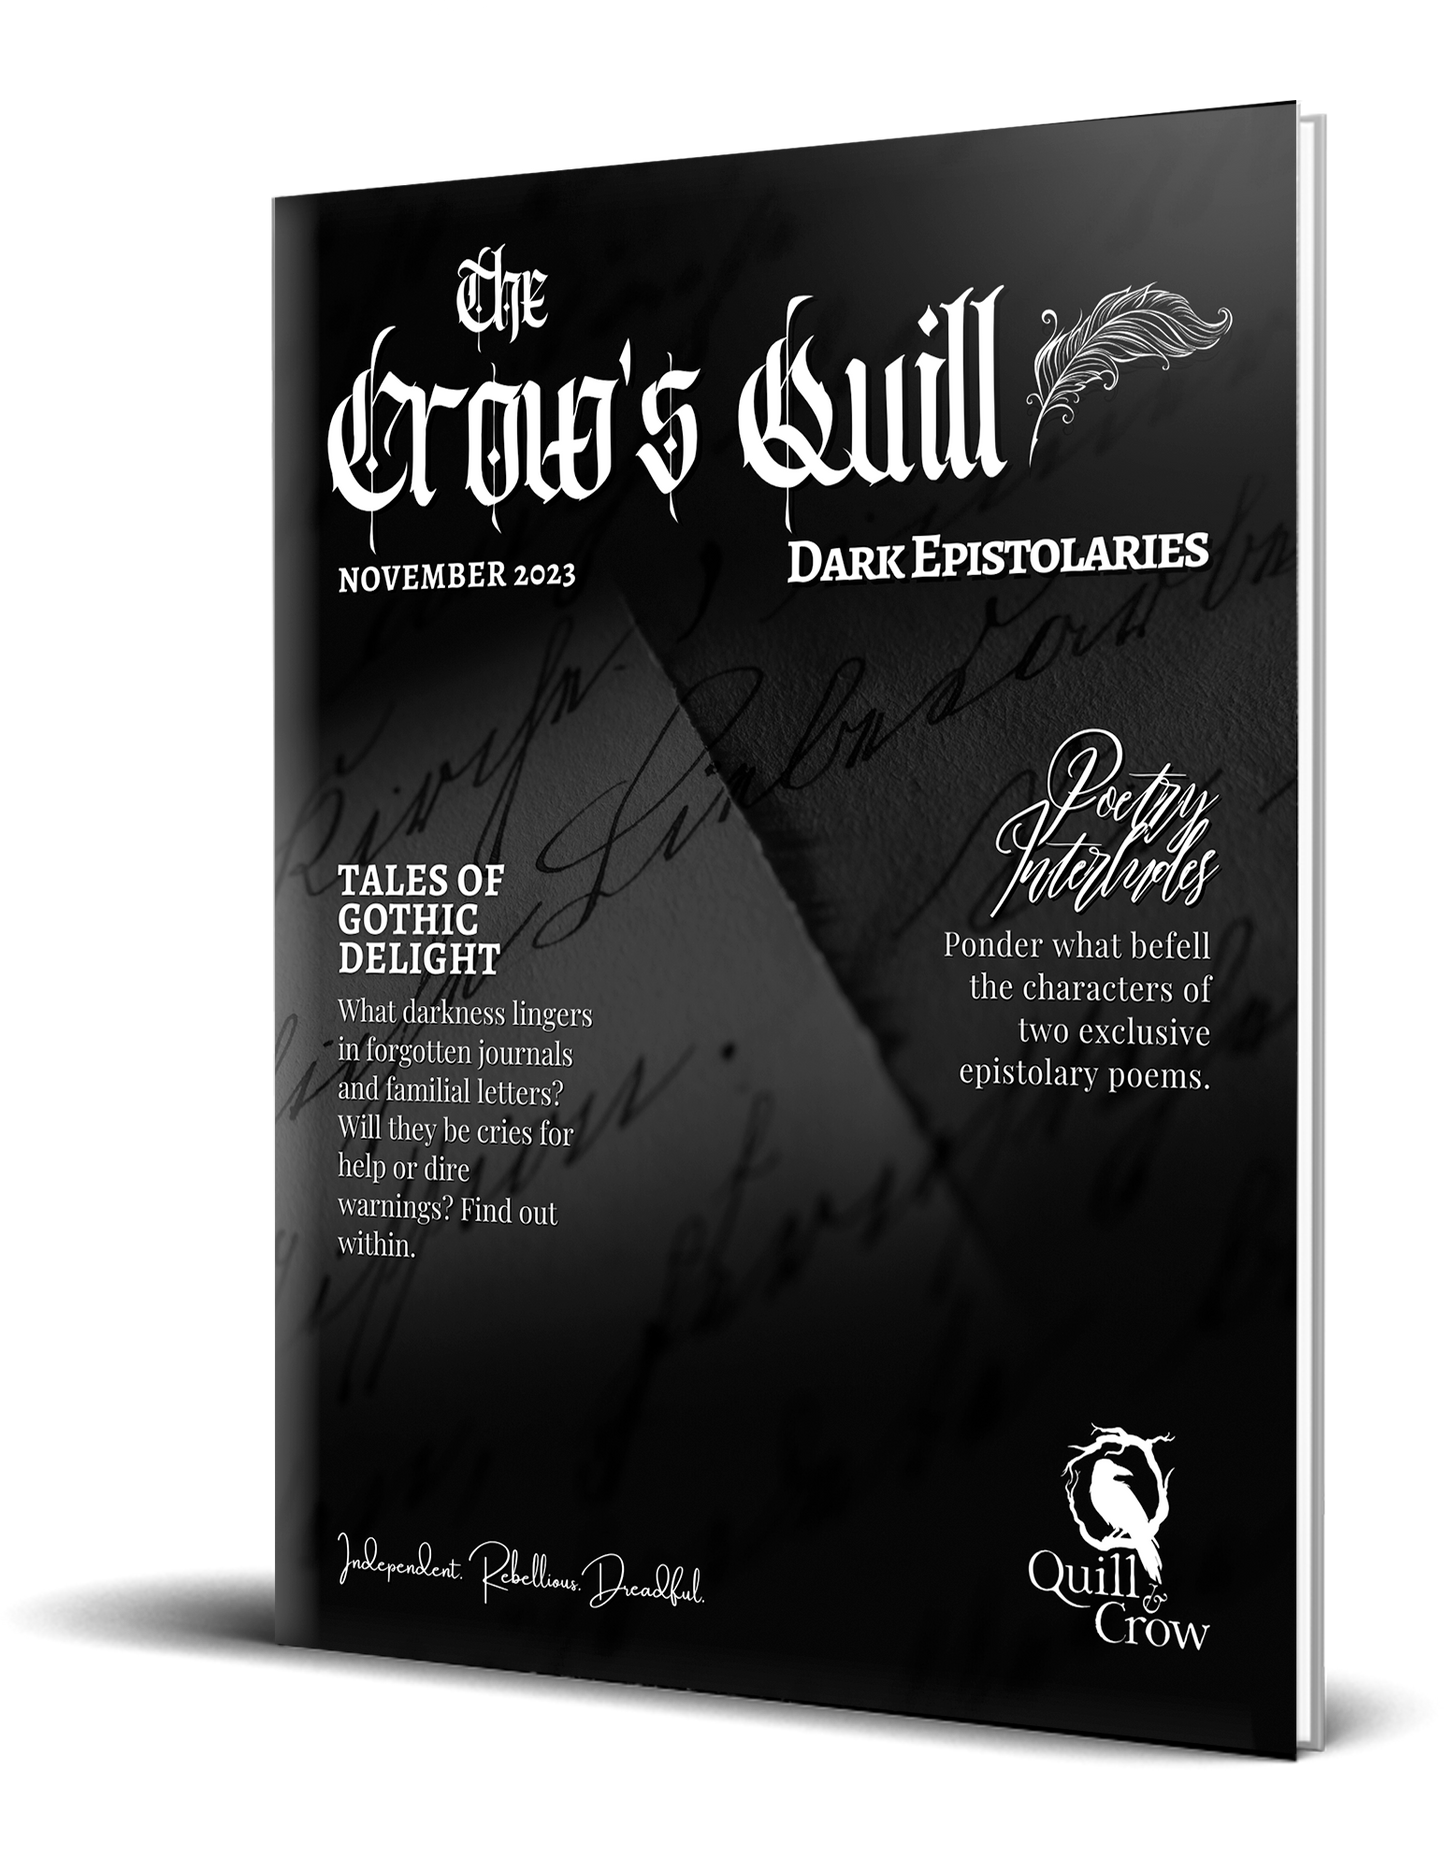 Revista The Crow's Quill: Número 28